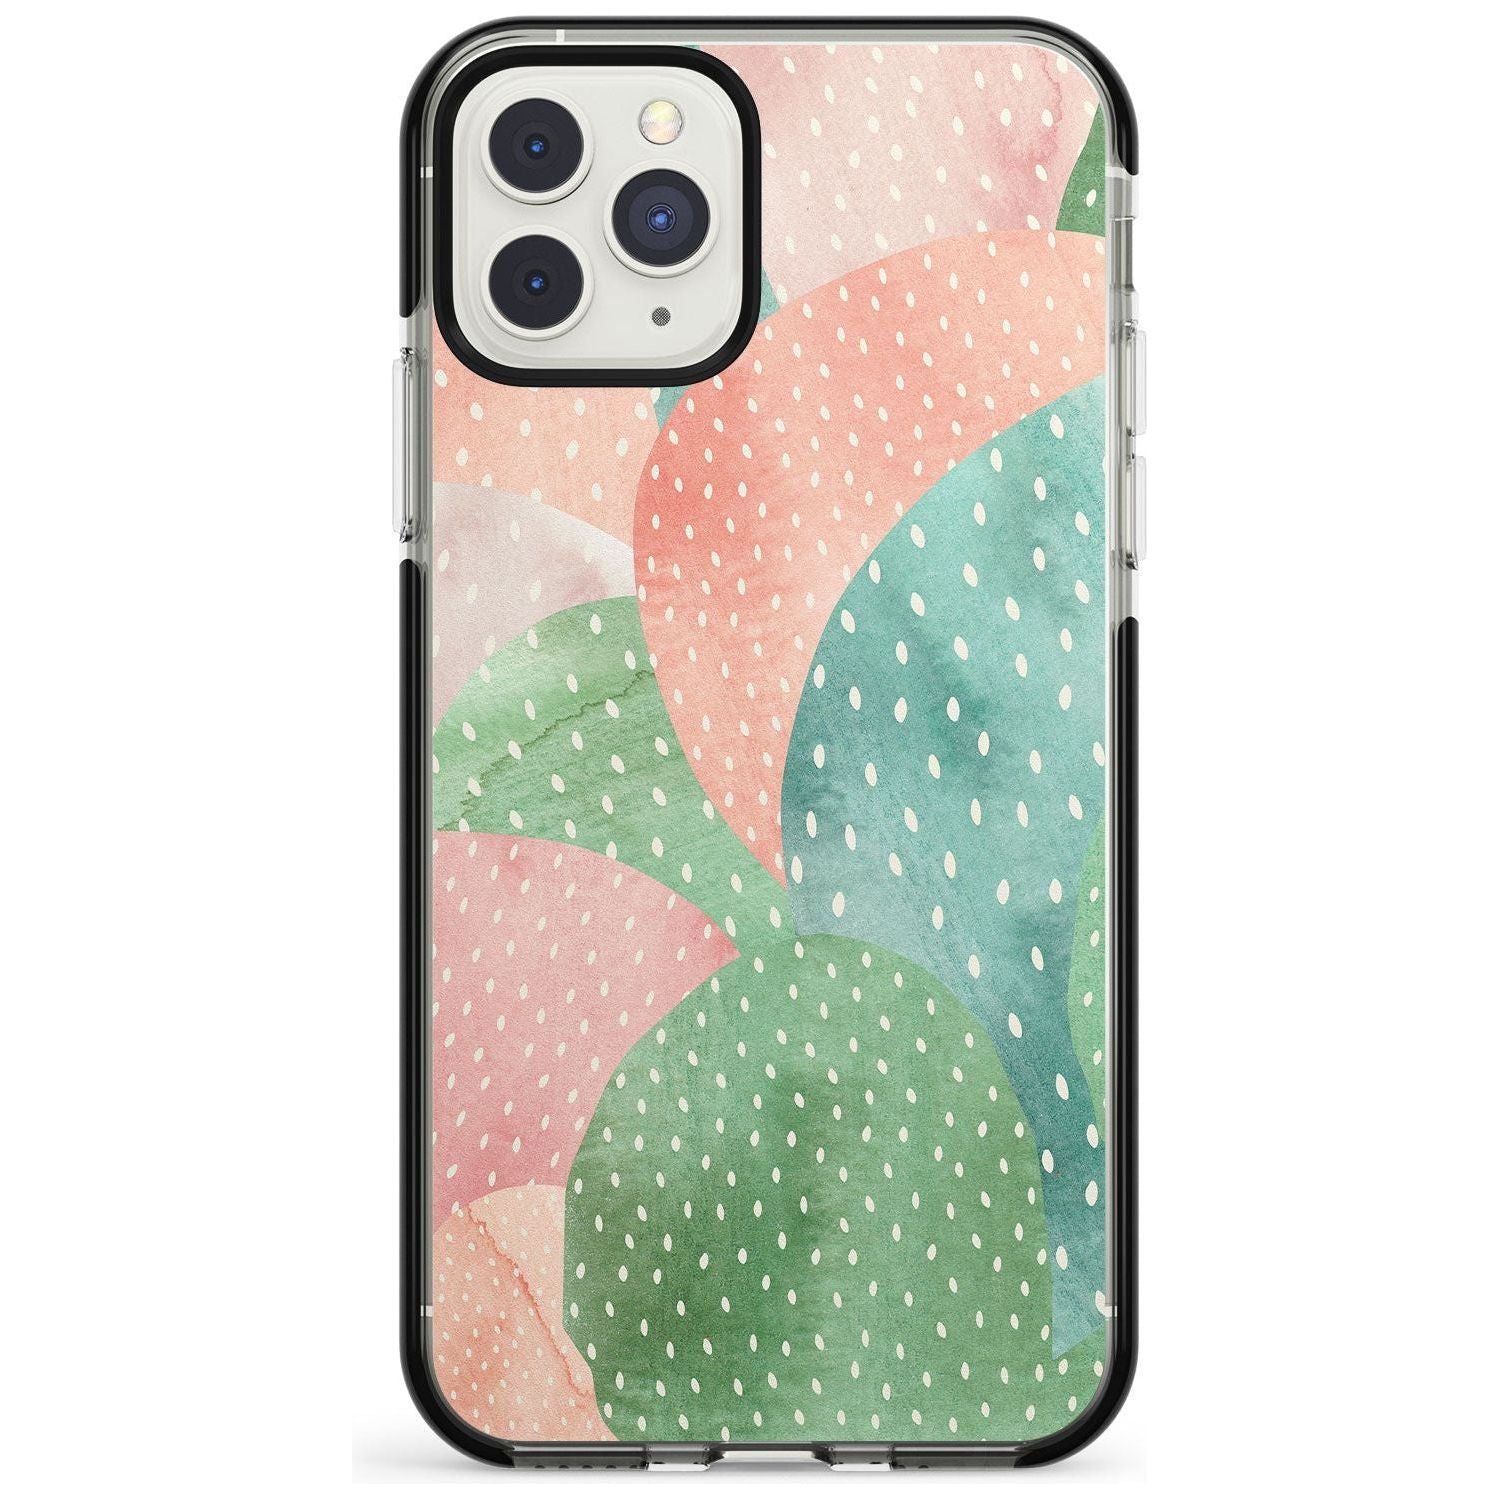 Colourful Close-Up Cacti Design Black Impact Phone Case for iPhone 11 Pro Max